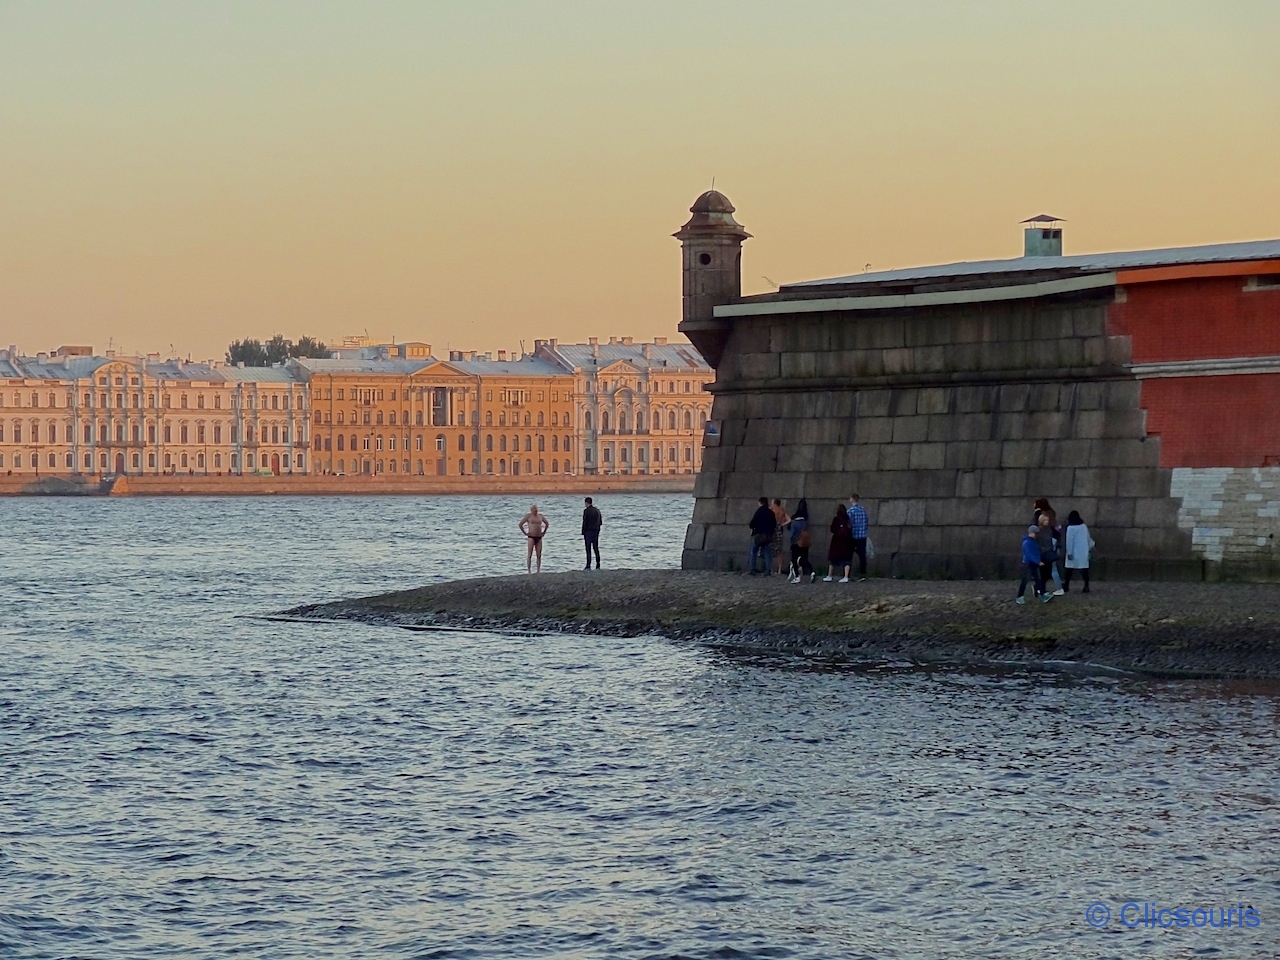 Saint-Pétersbourg Neva